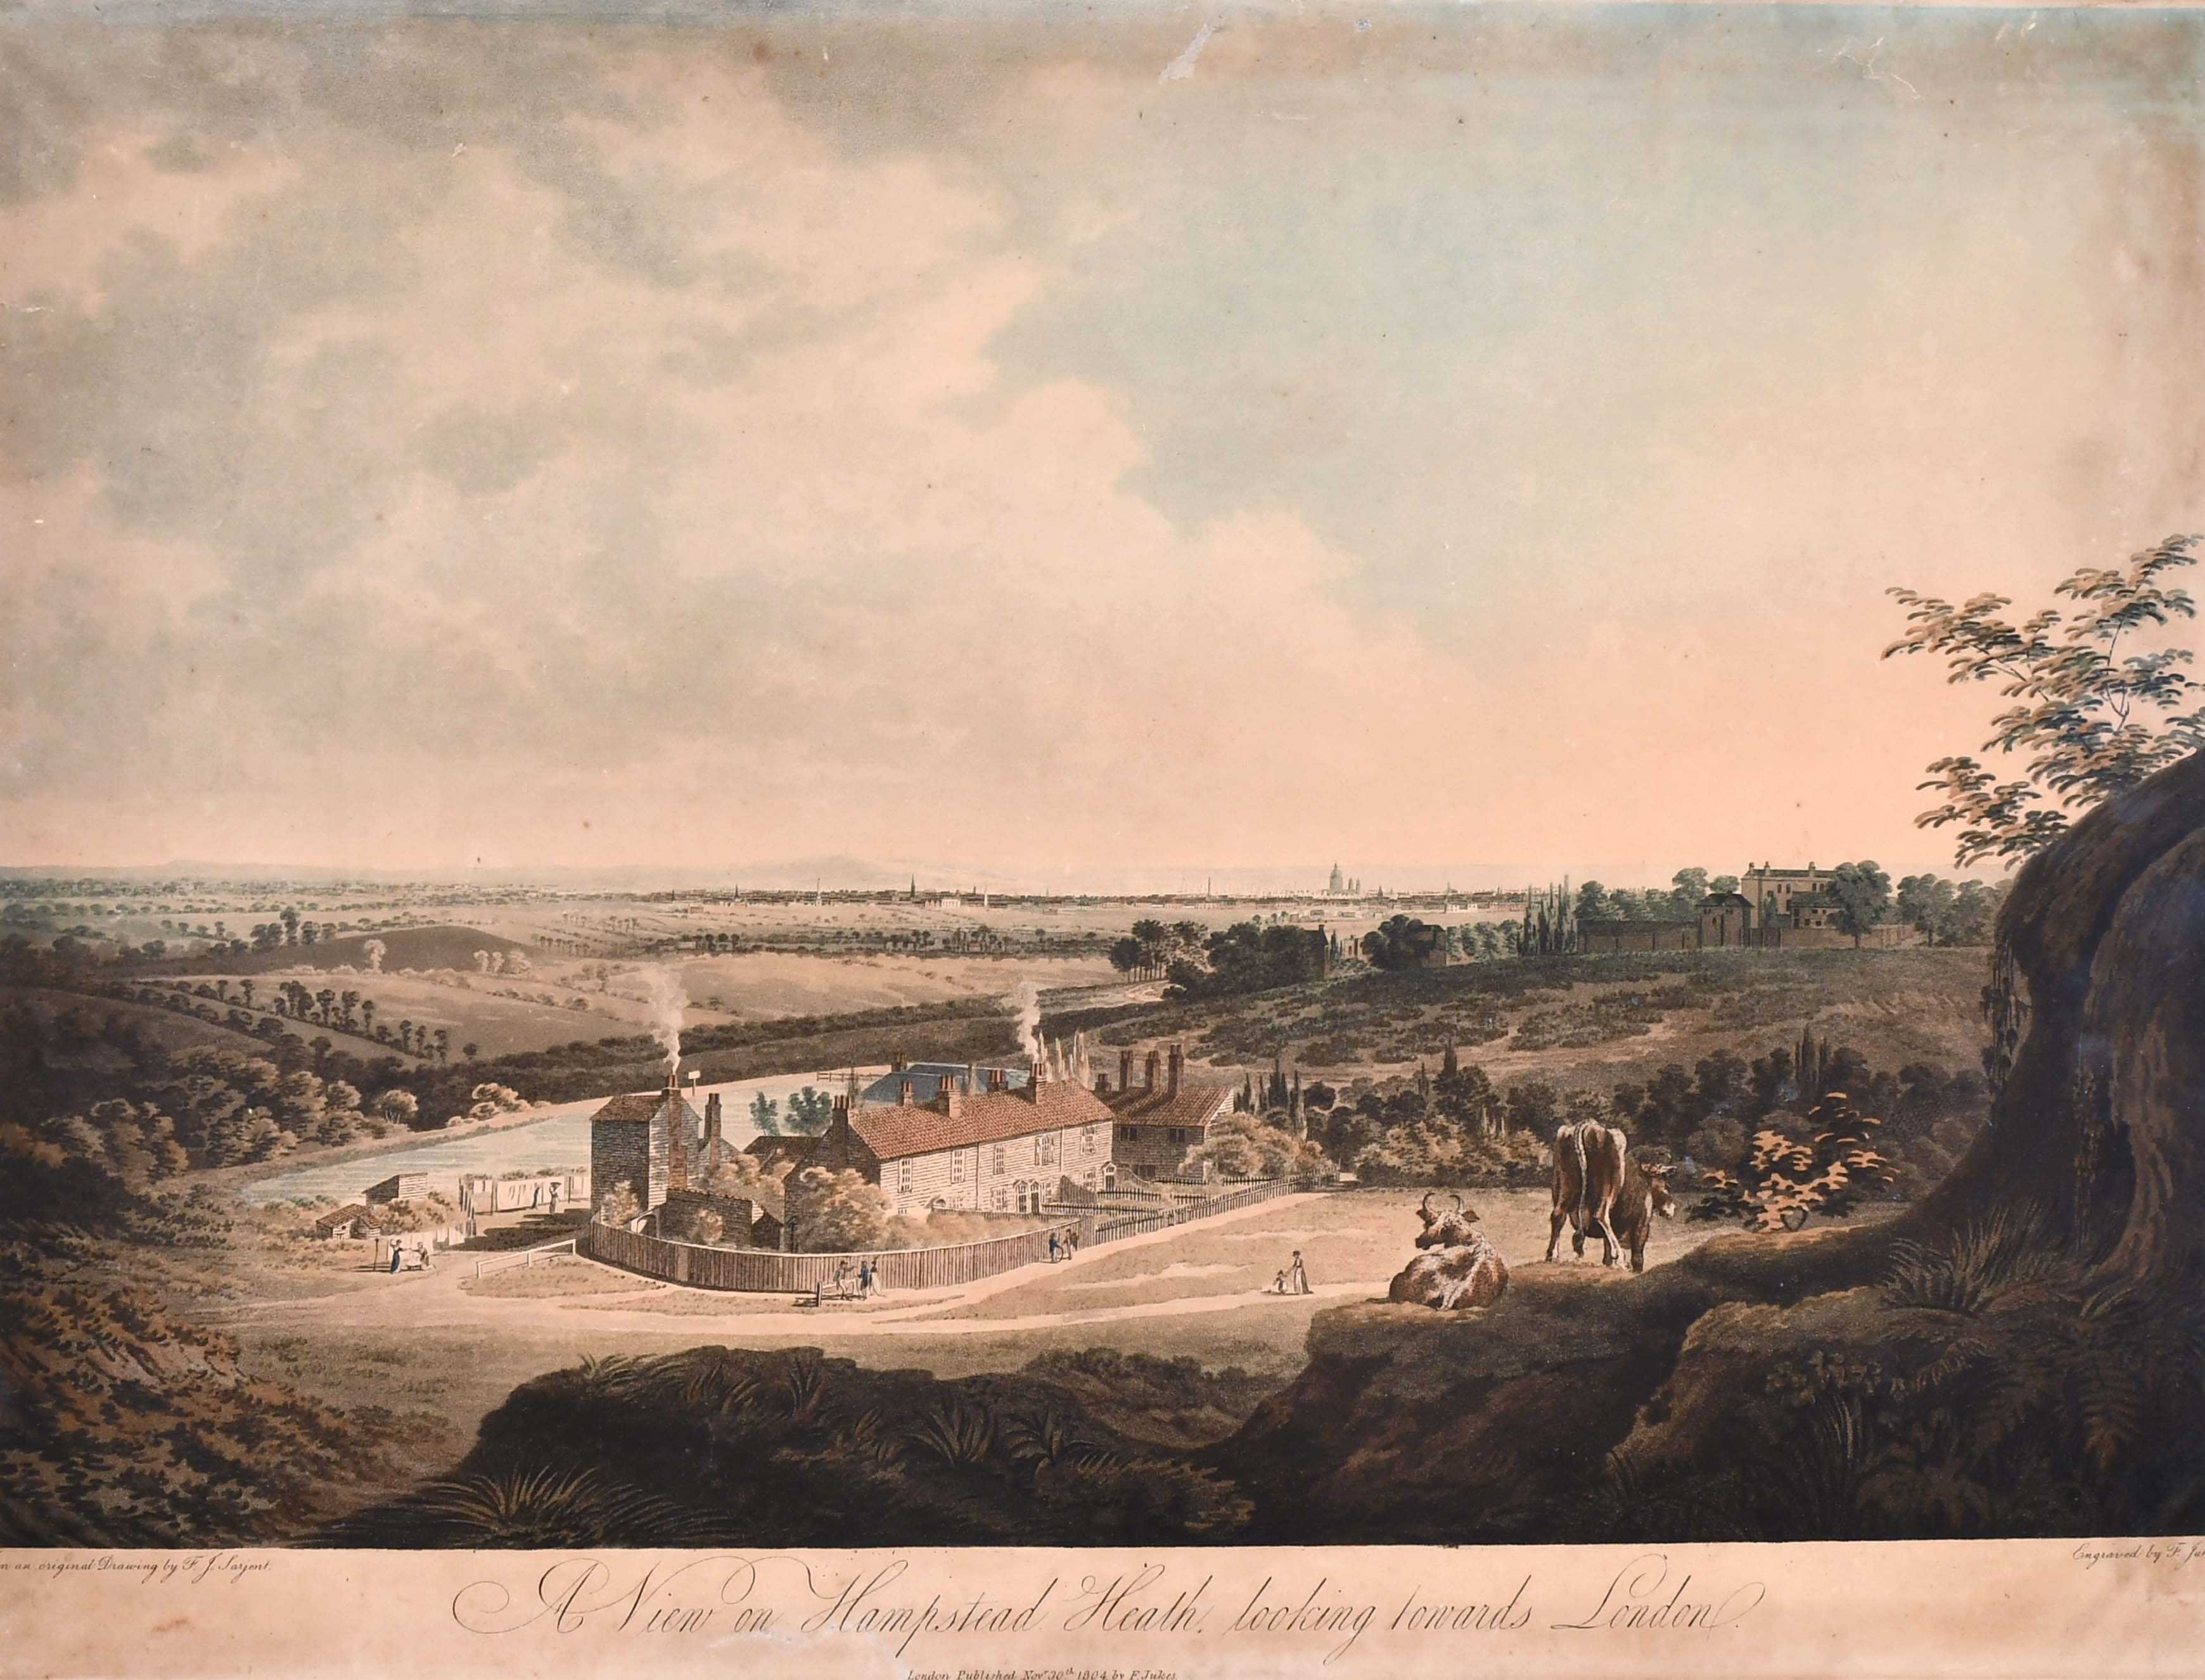 Francis John Sarjent (c.1780-1812) British. “A View on Hampstead Heath, looking towards London”,